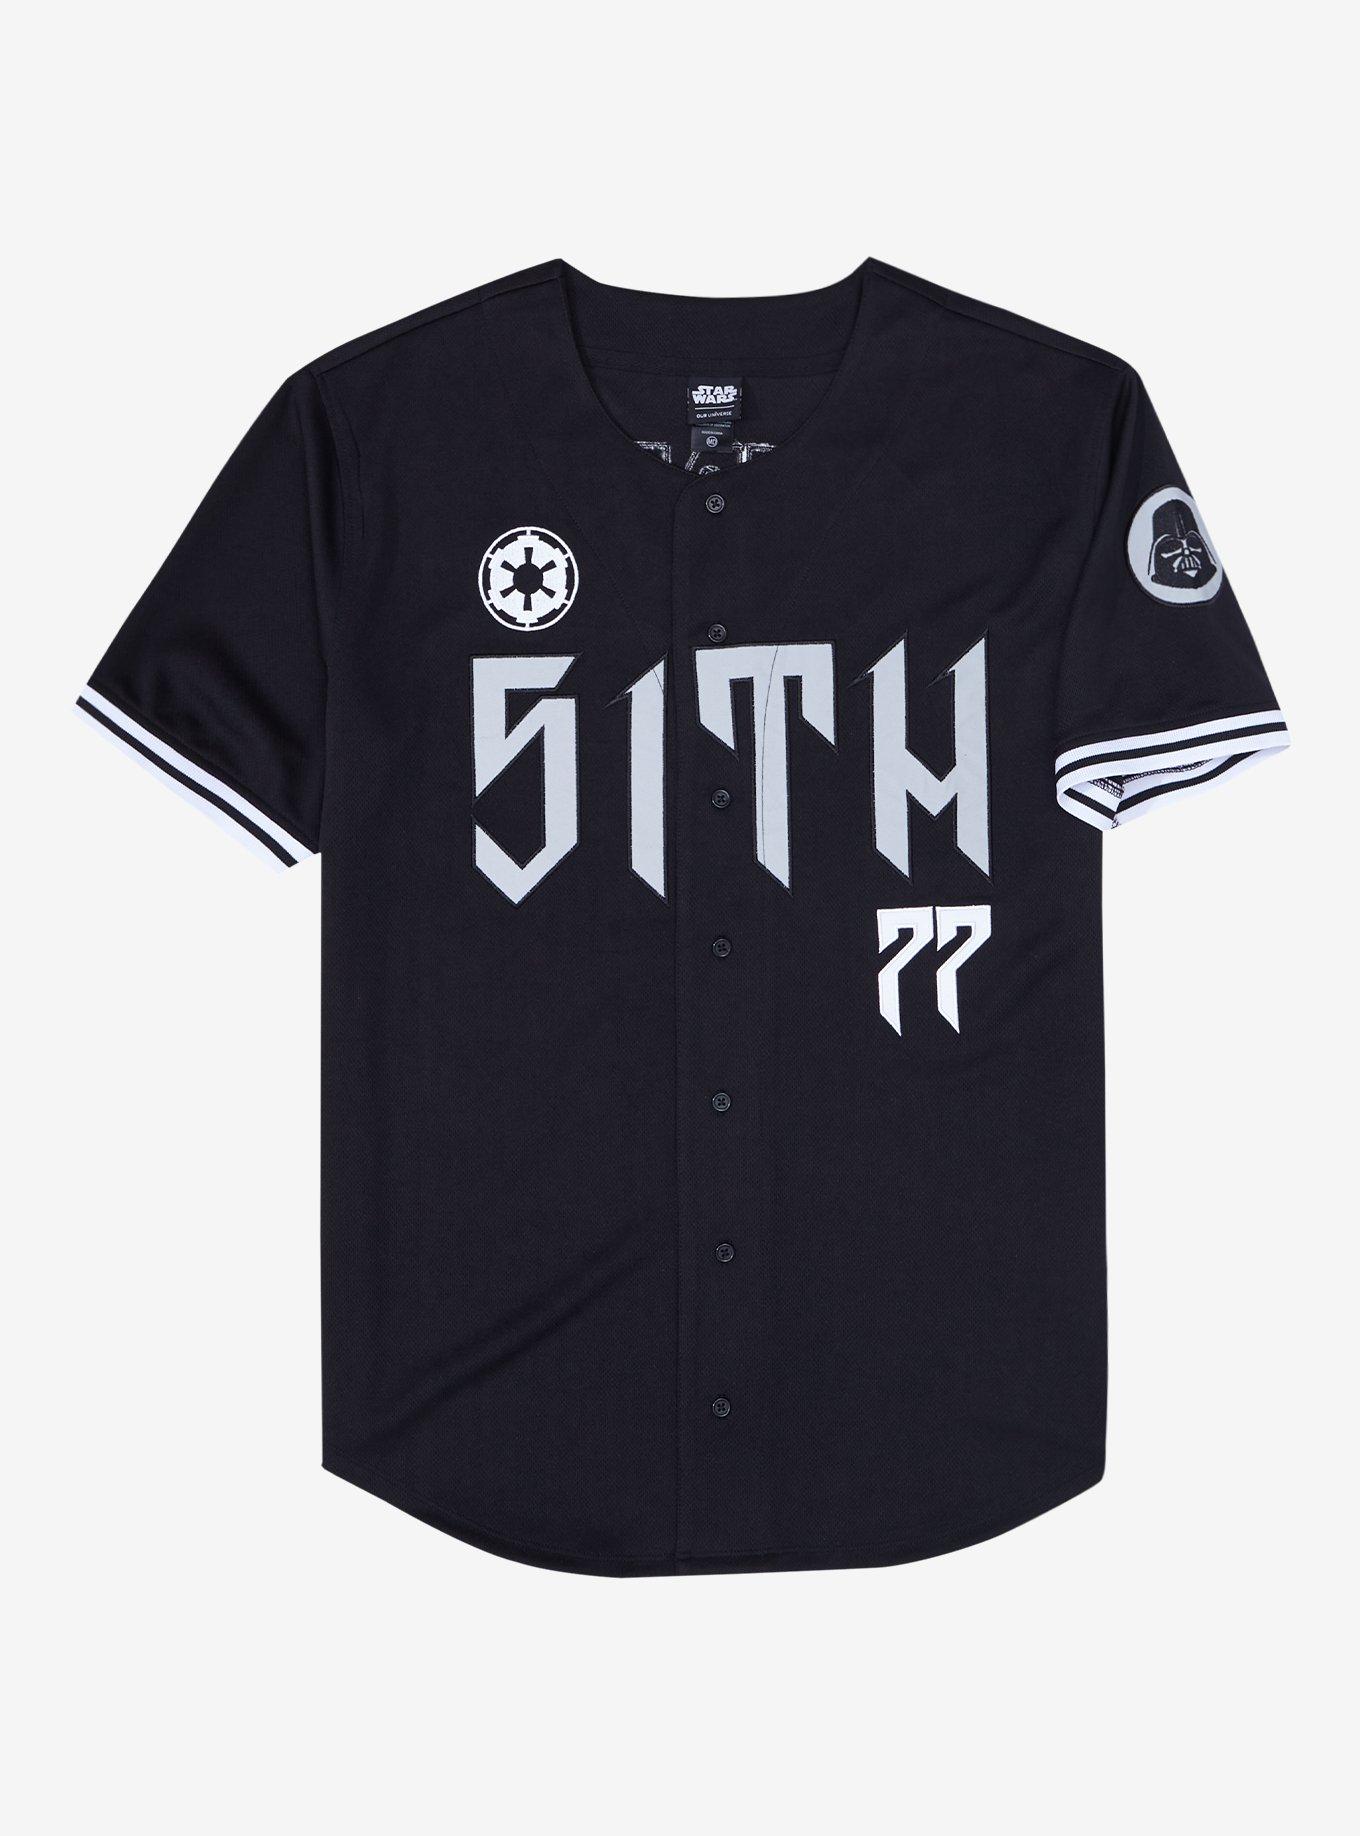 Custom Team Gray Baseball Authentic Black Split Fashion Jersey Red